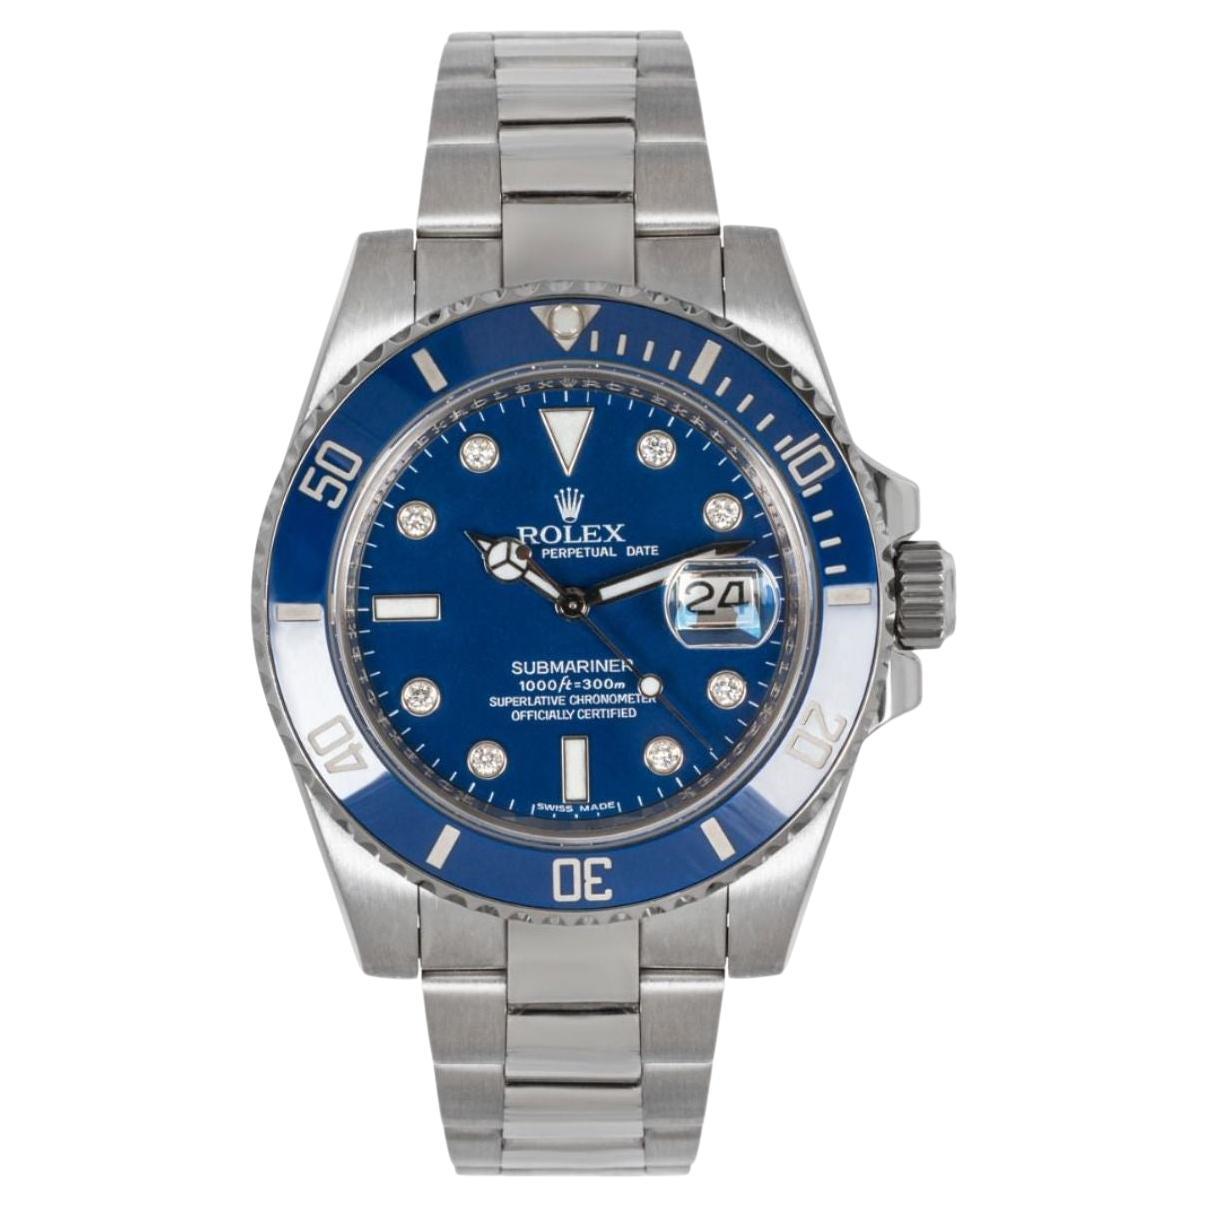 Rare Rolex Submariner Date Smurf Diamond Dial 116619LB Watch